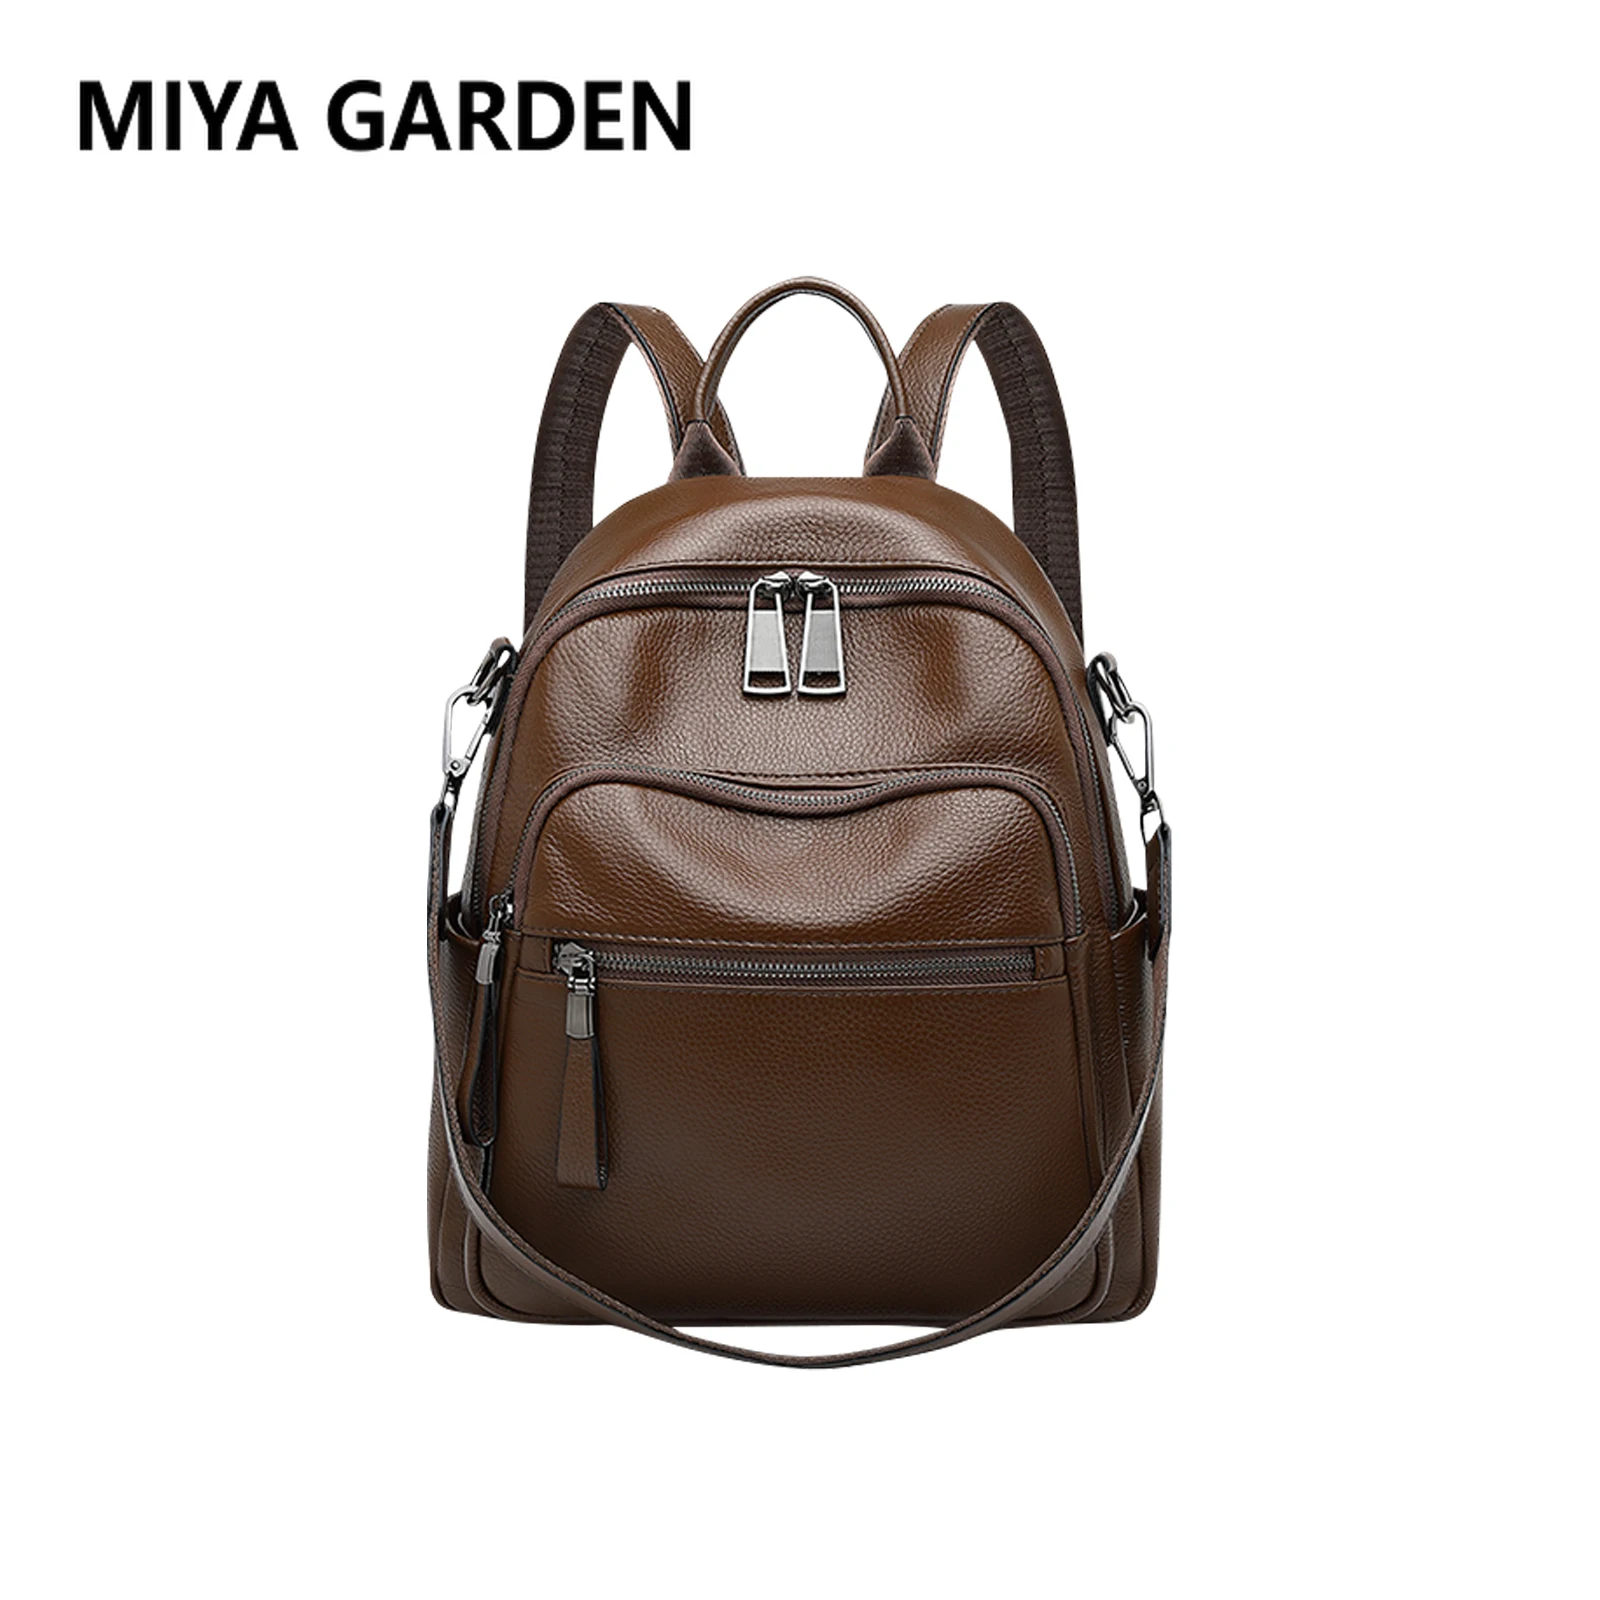 

MIYA GARDEN Leather Backpack Fashion Women's Shoulder Bag Versatile Commuter Cowhide Backpack High Quality School Bag Mochila